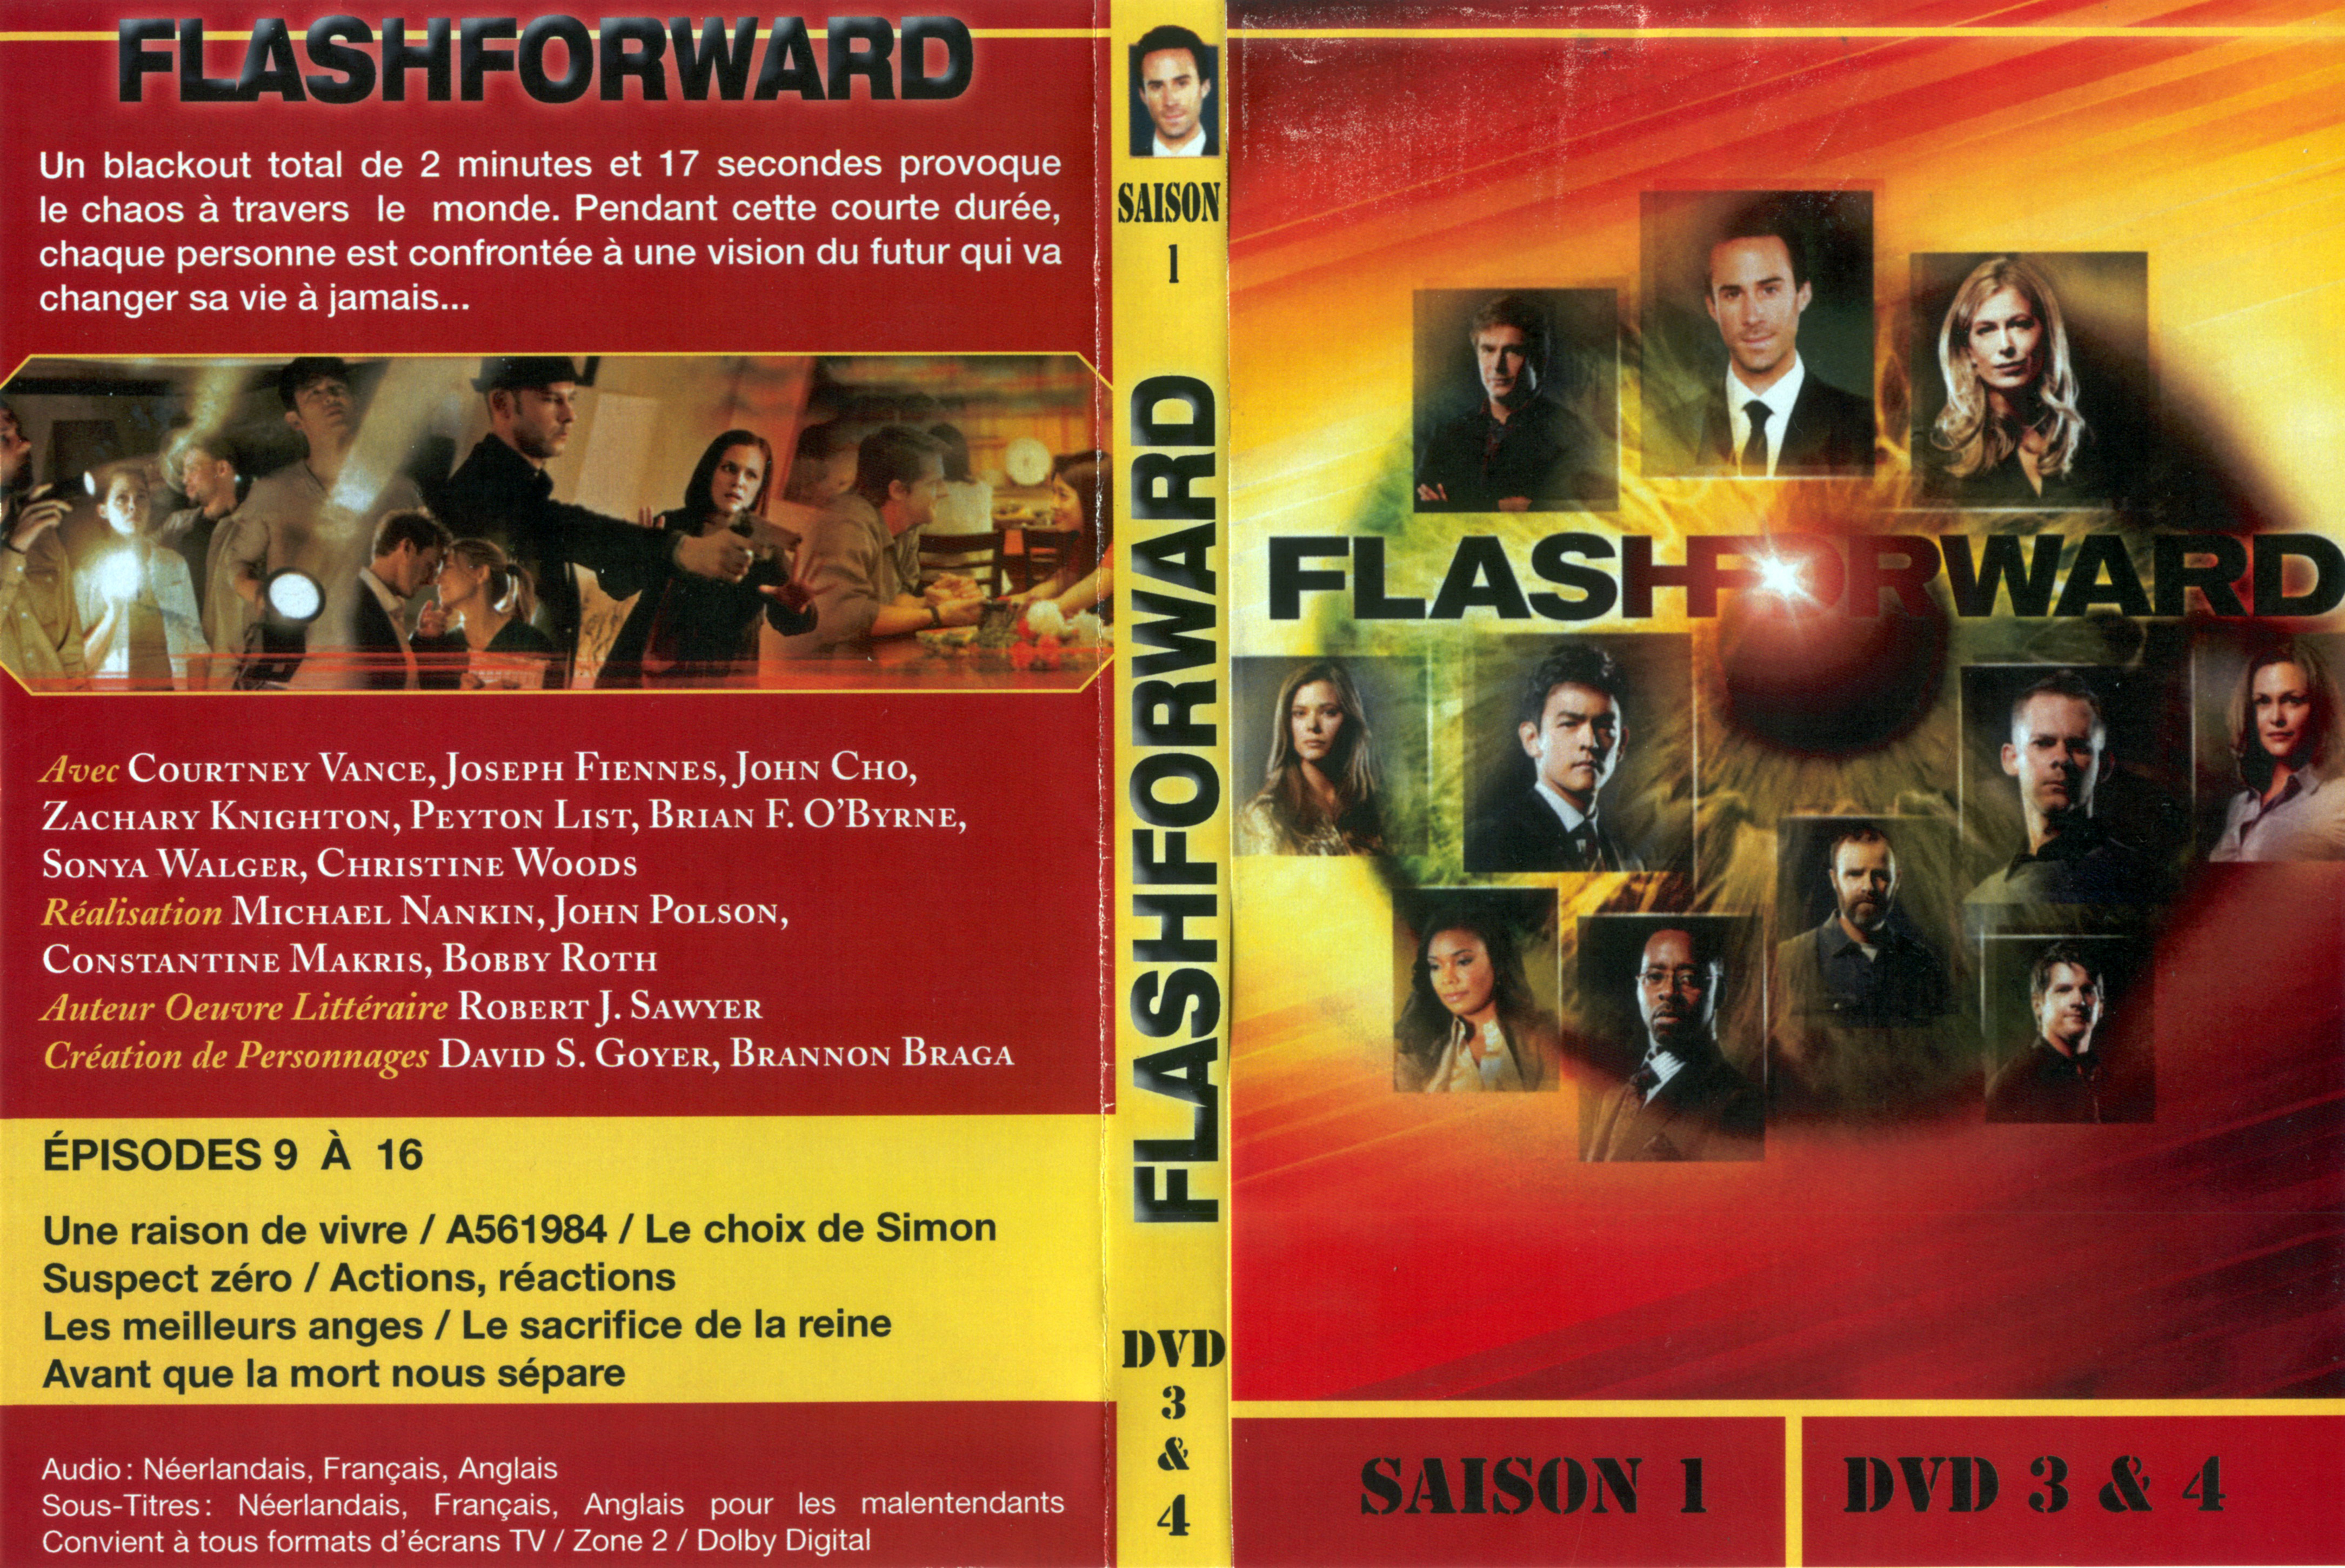 Jaquette DVD Flashforward Saison 1 DVD 2